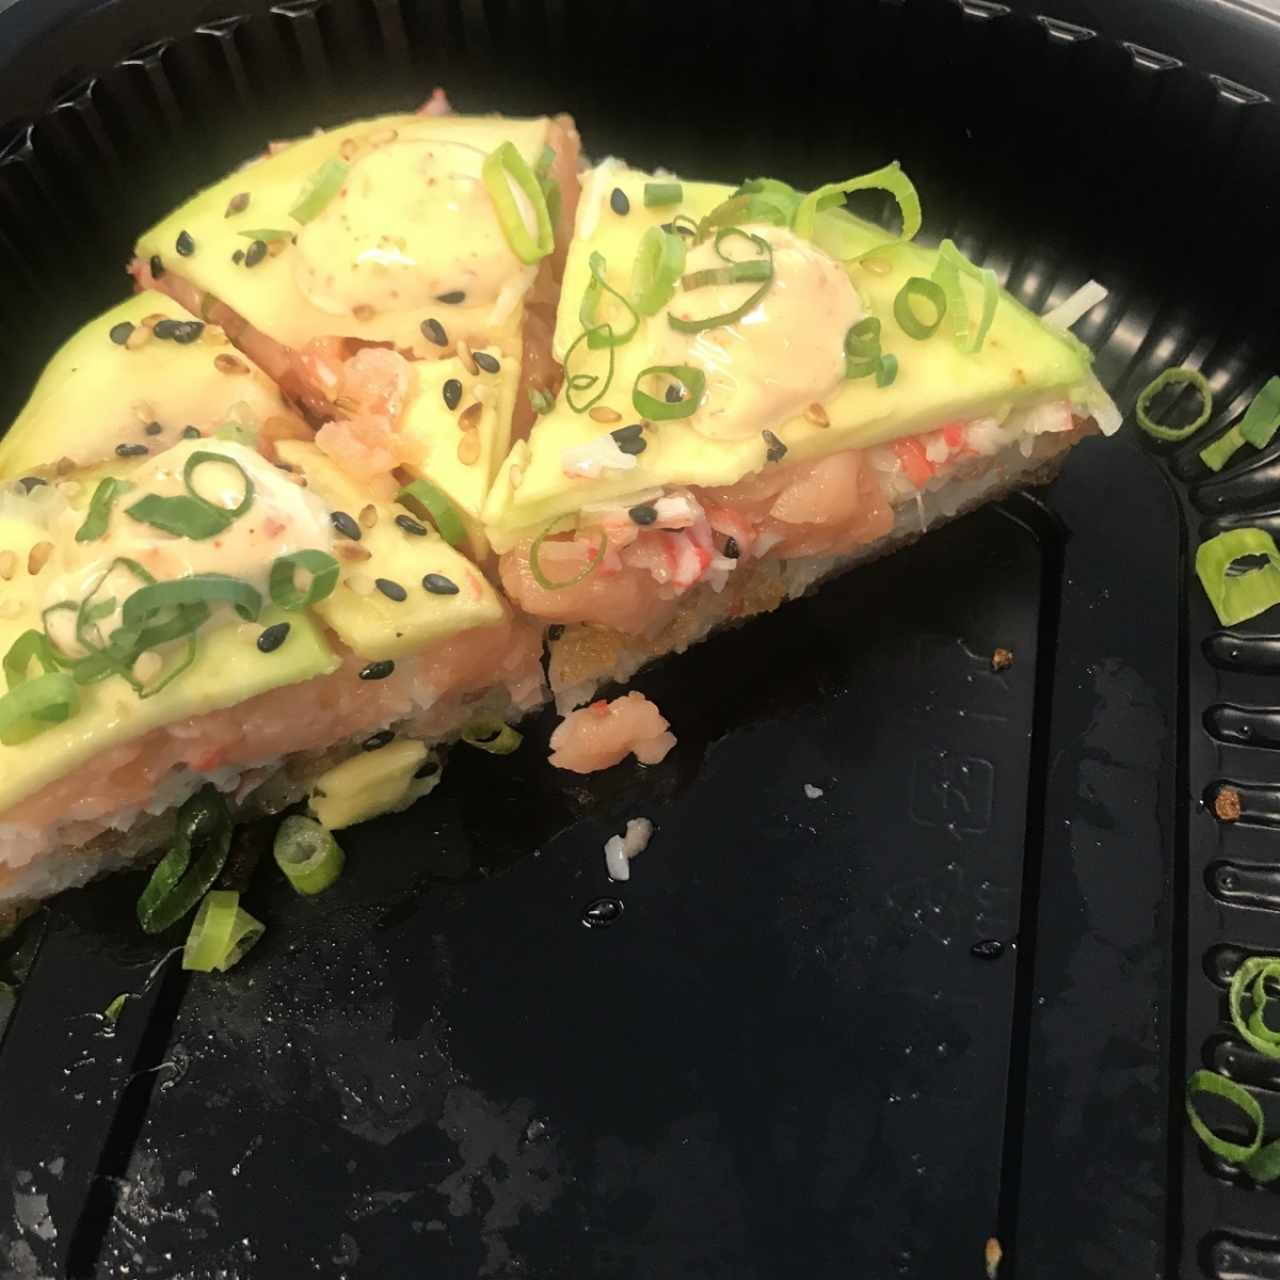 pizza de salmon